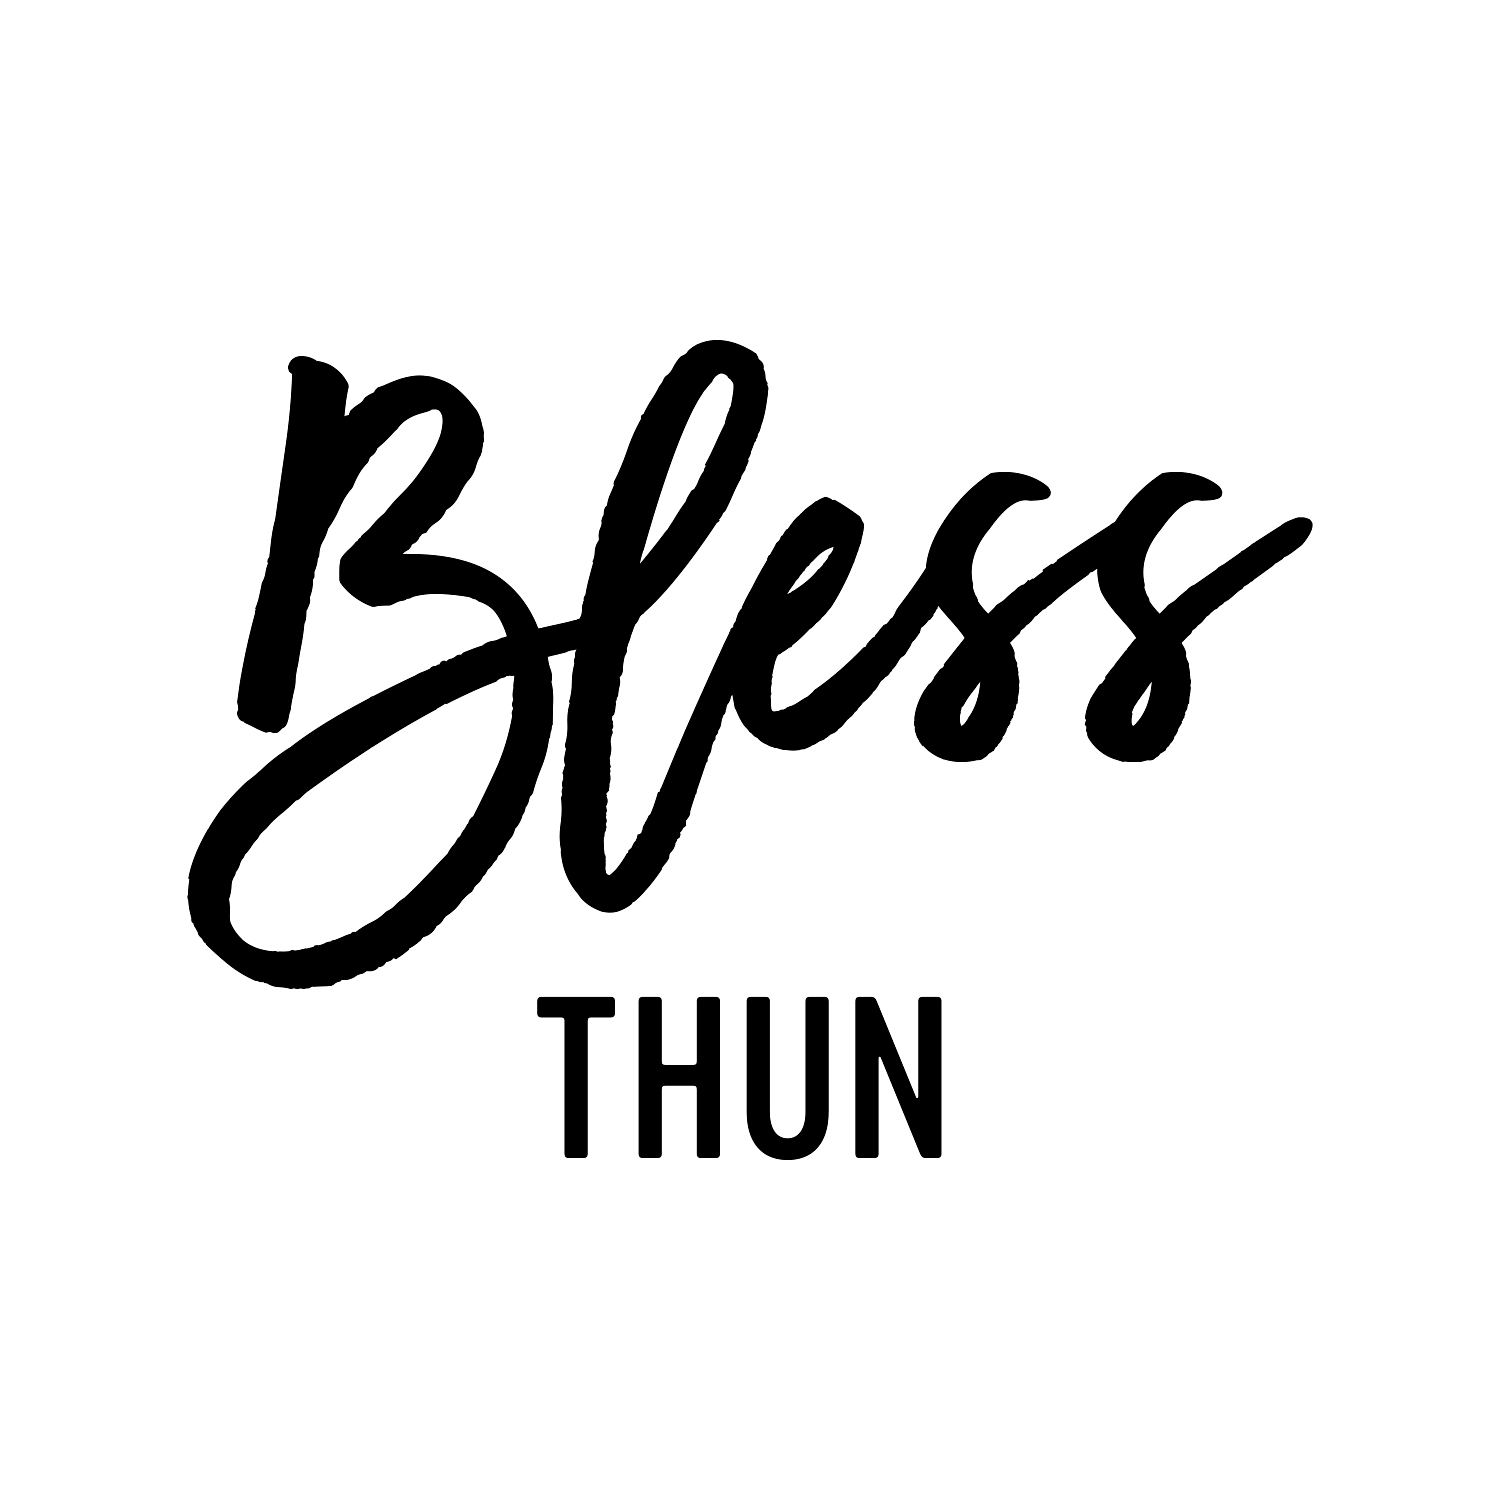 Blessthun logo